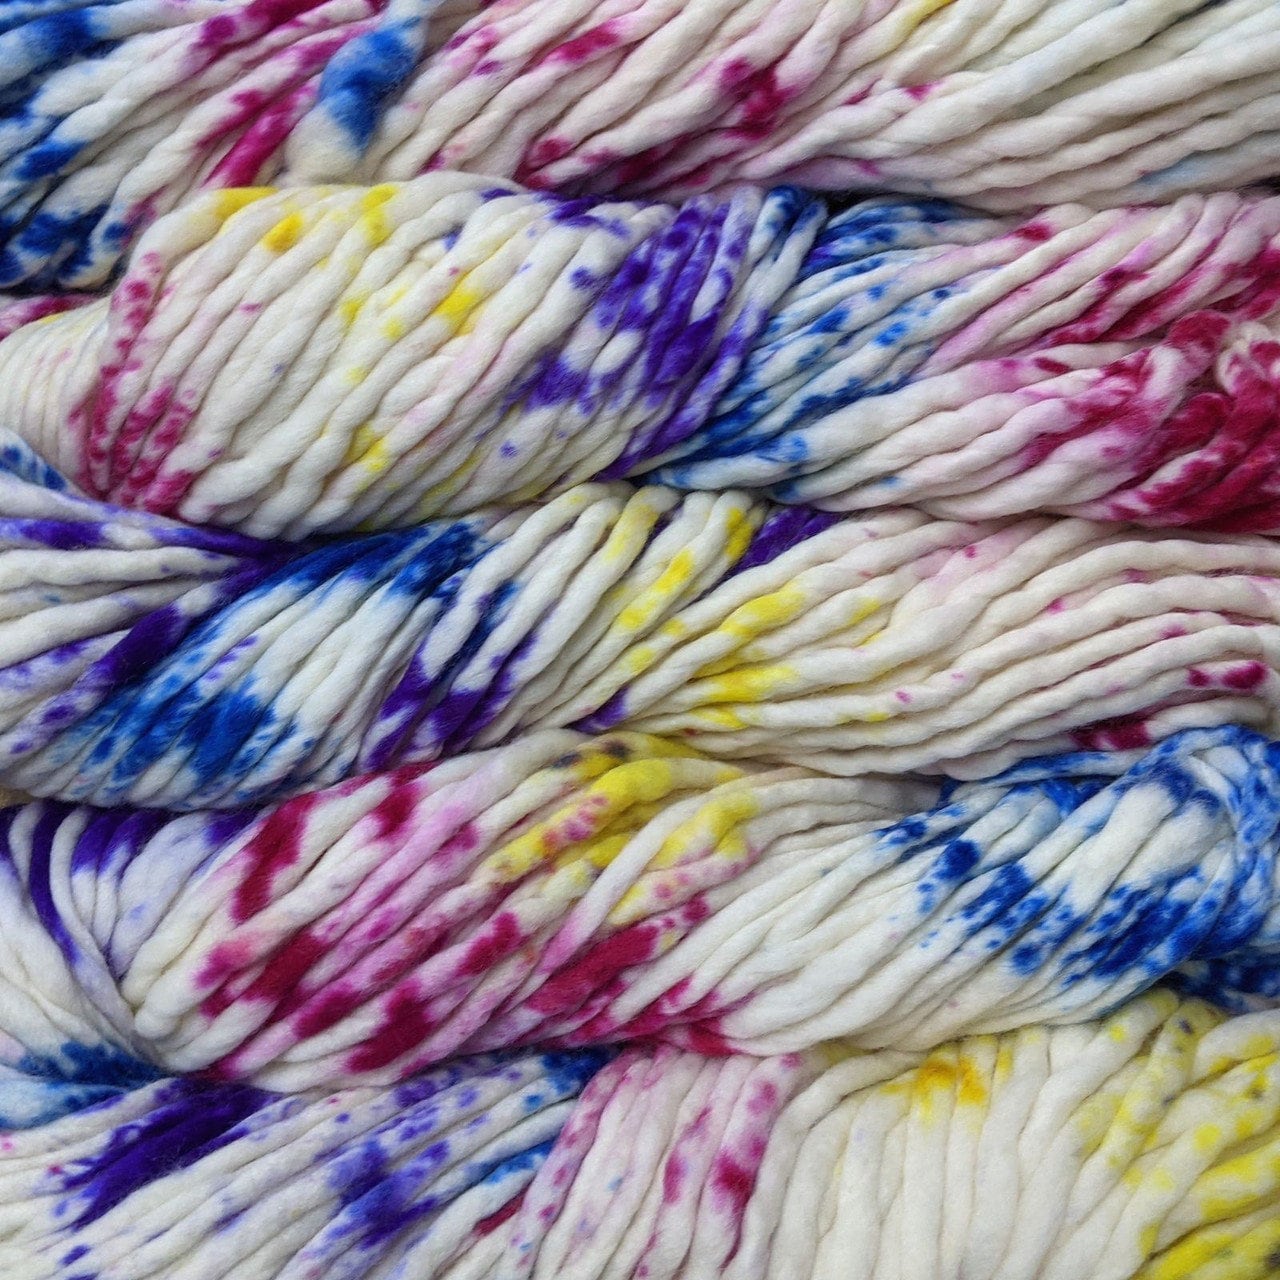 Colorful Yarn, closeup of colorful yarn, Diana Robinson